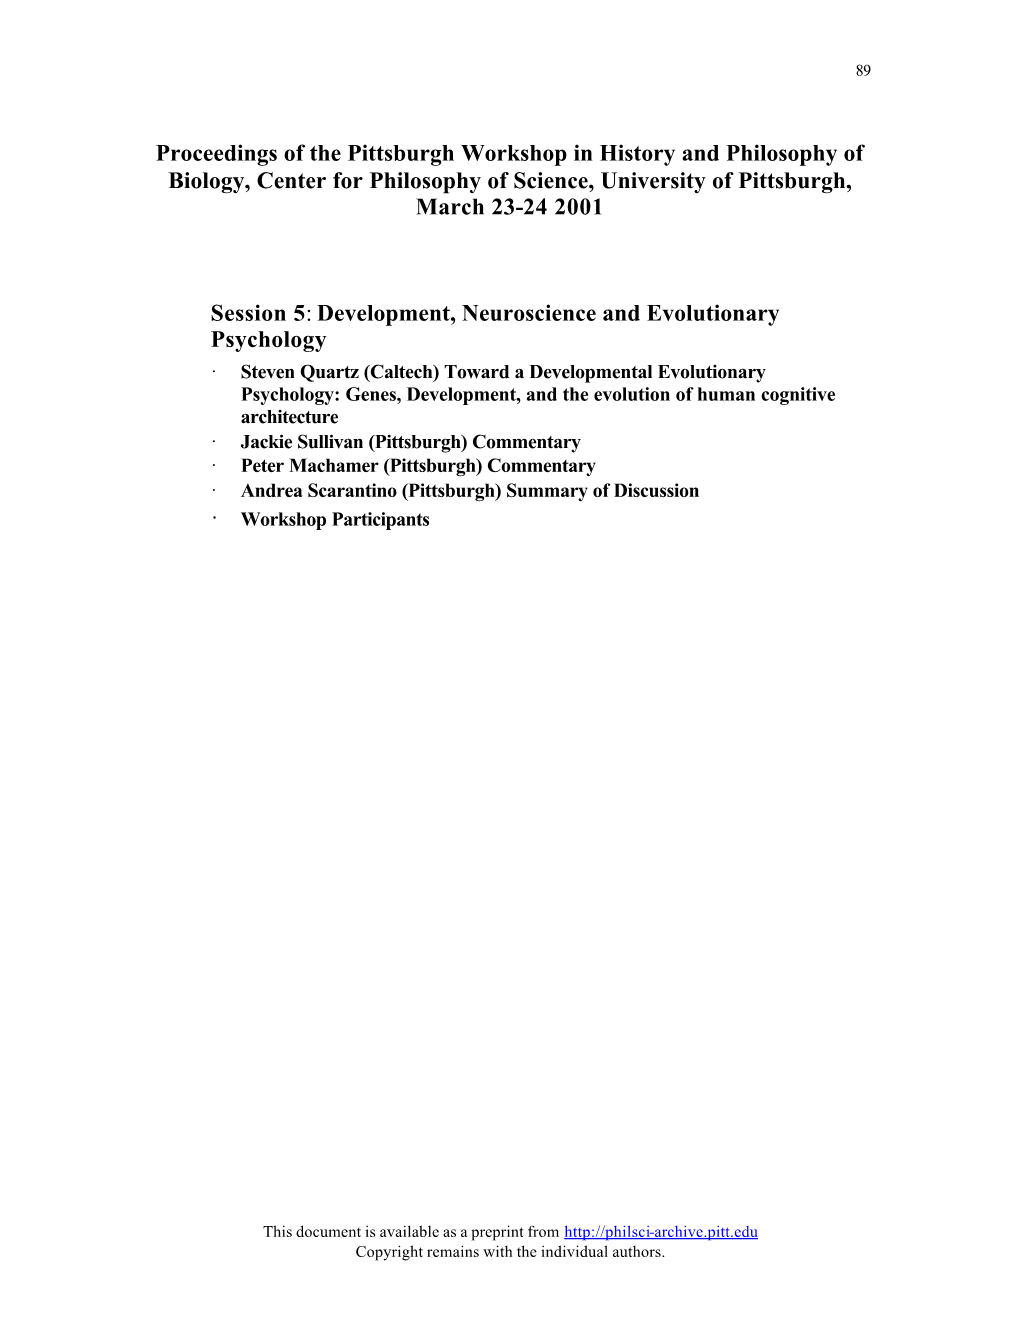 Development, Neuroscience and Evolutionary Psychology